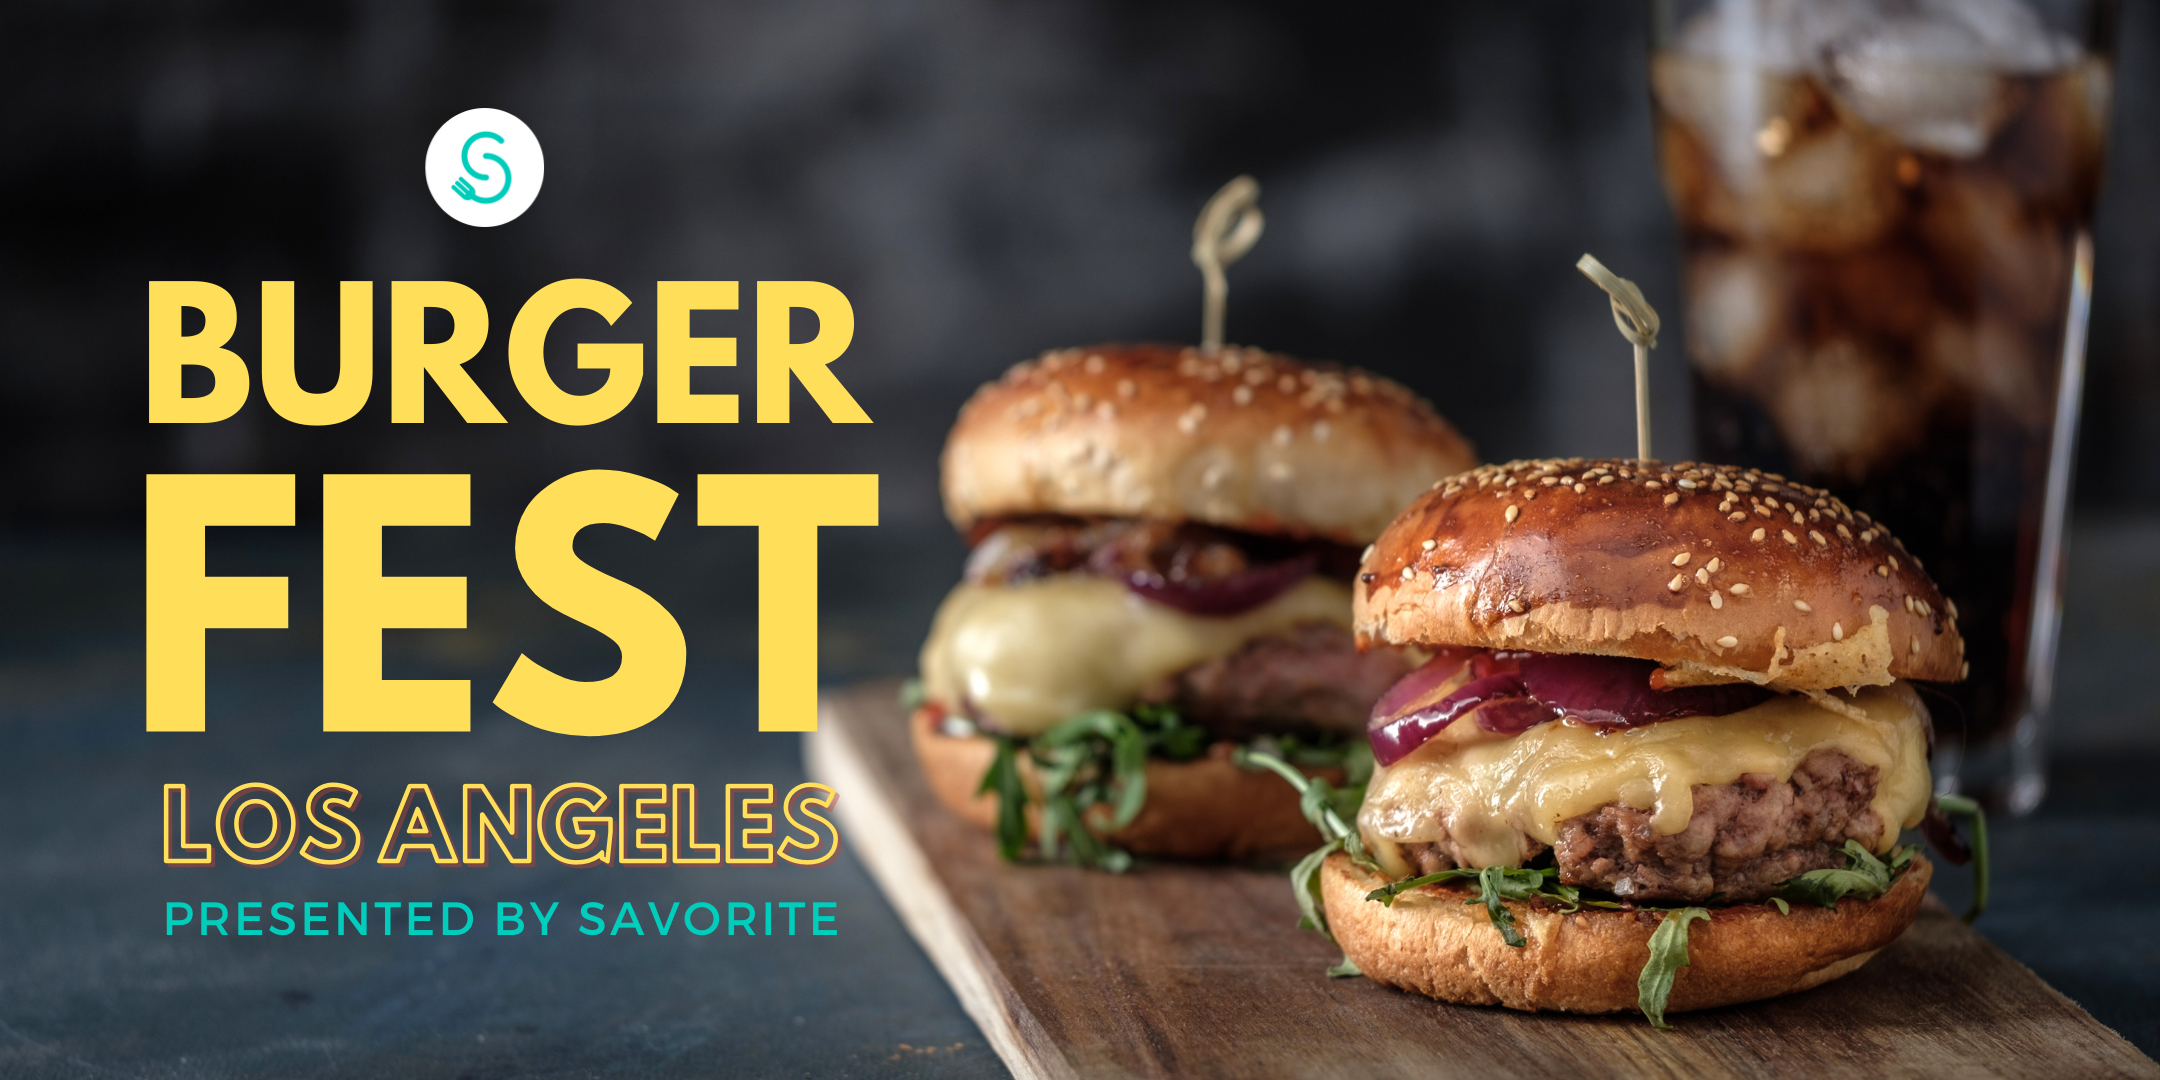 Burger Fest in LA by Savorite